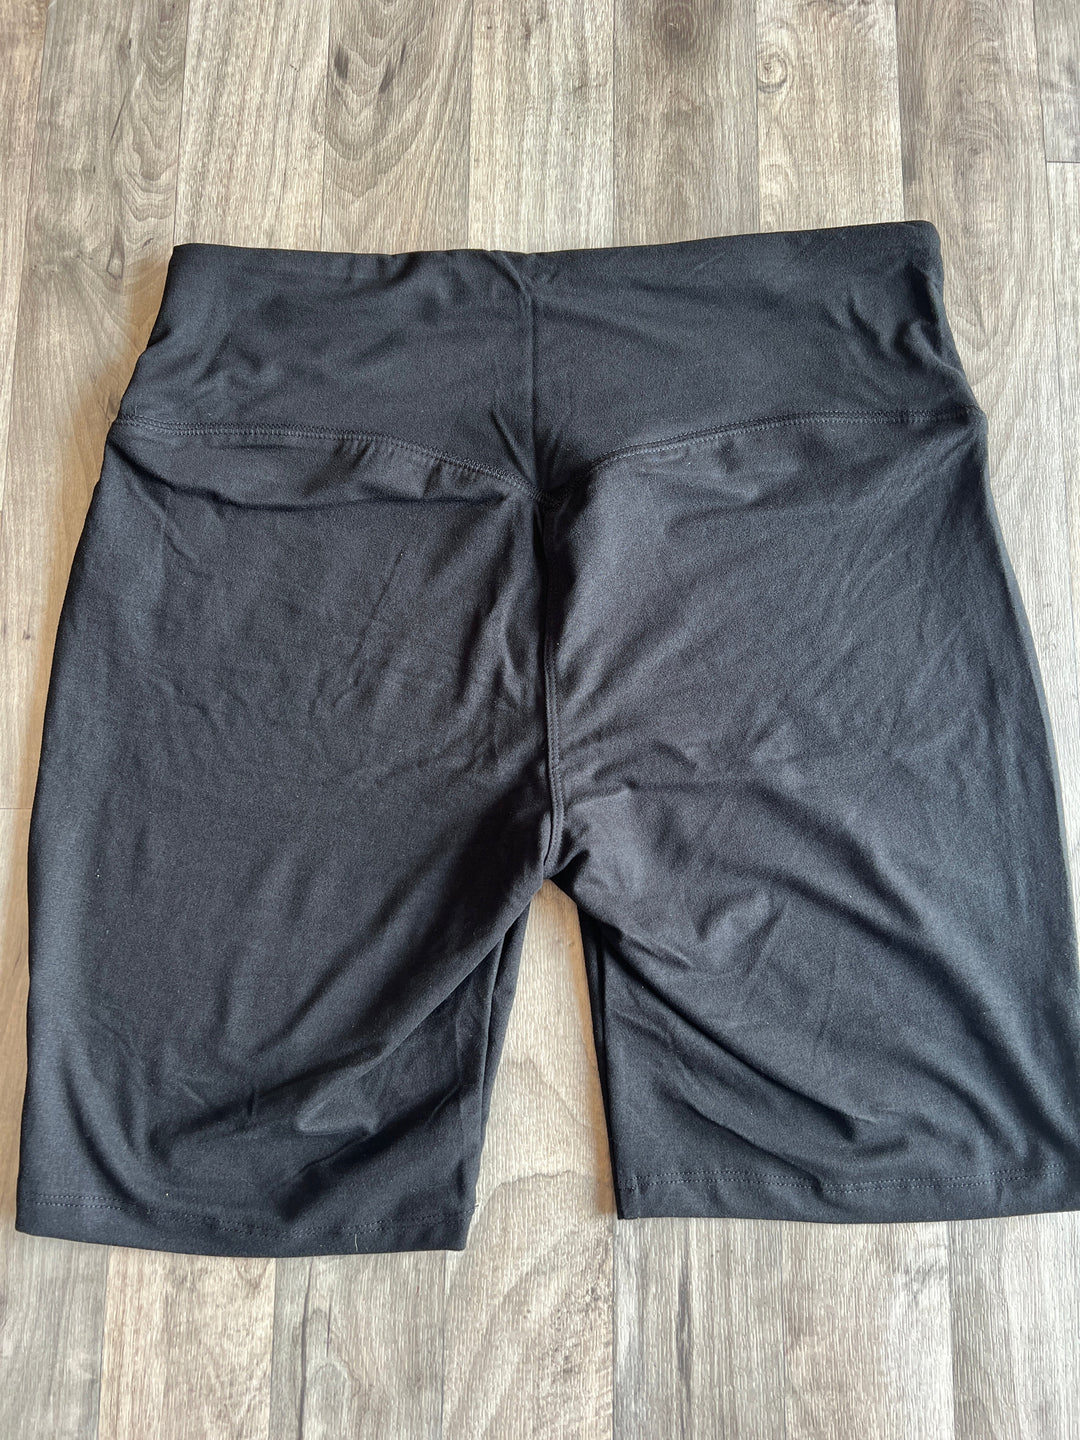 Black Biker Shorts No Pockets